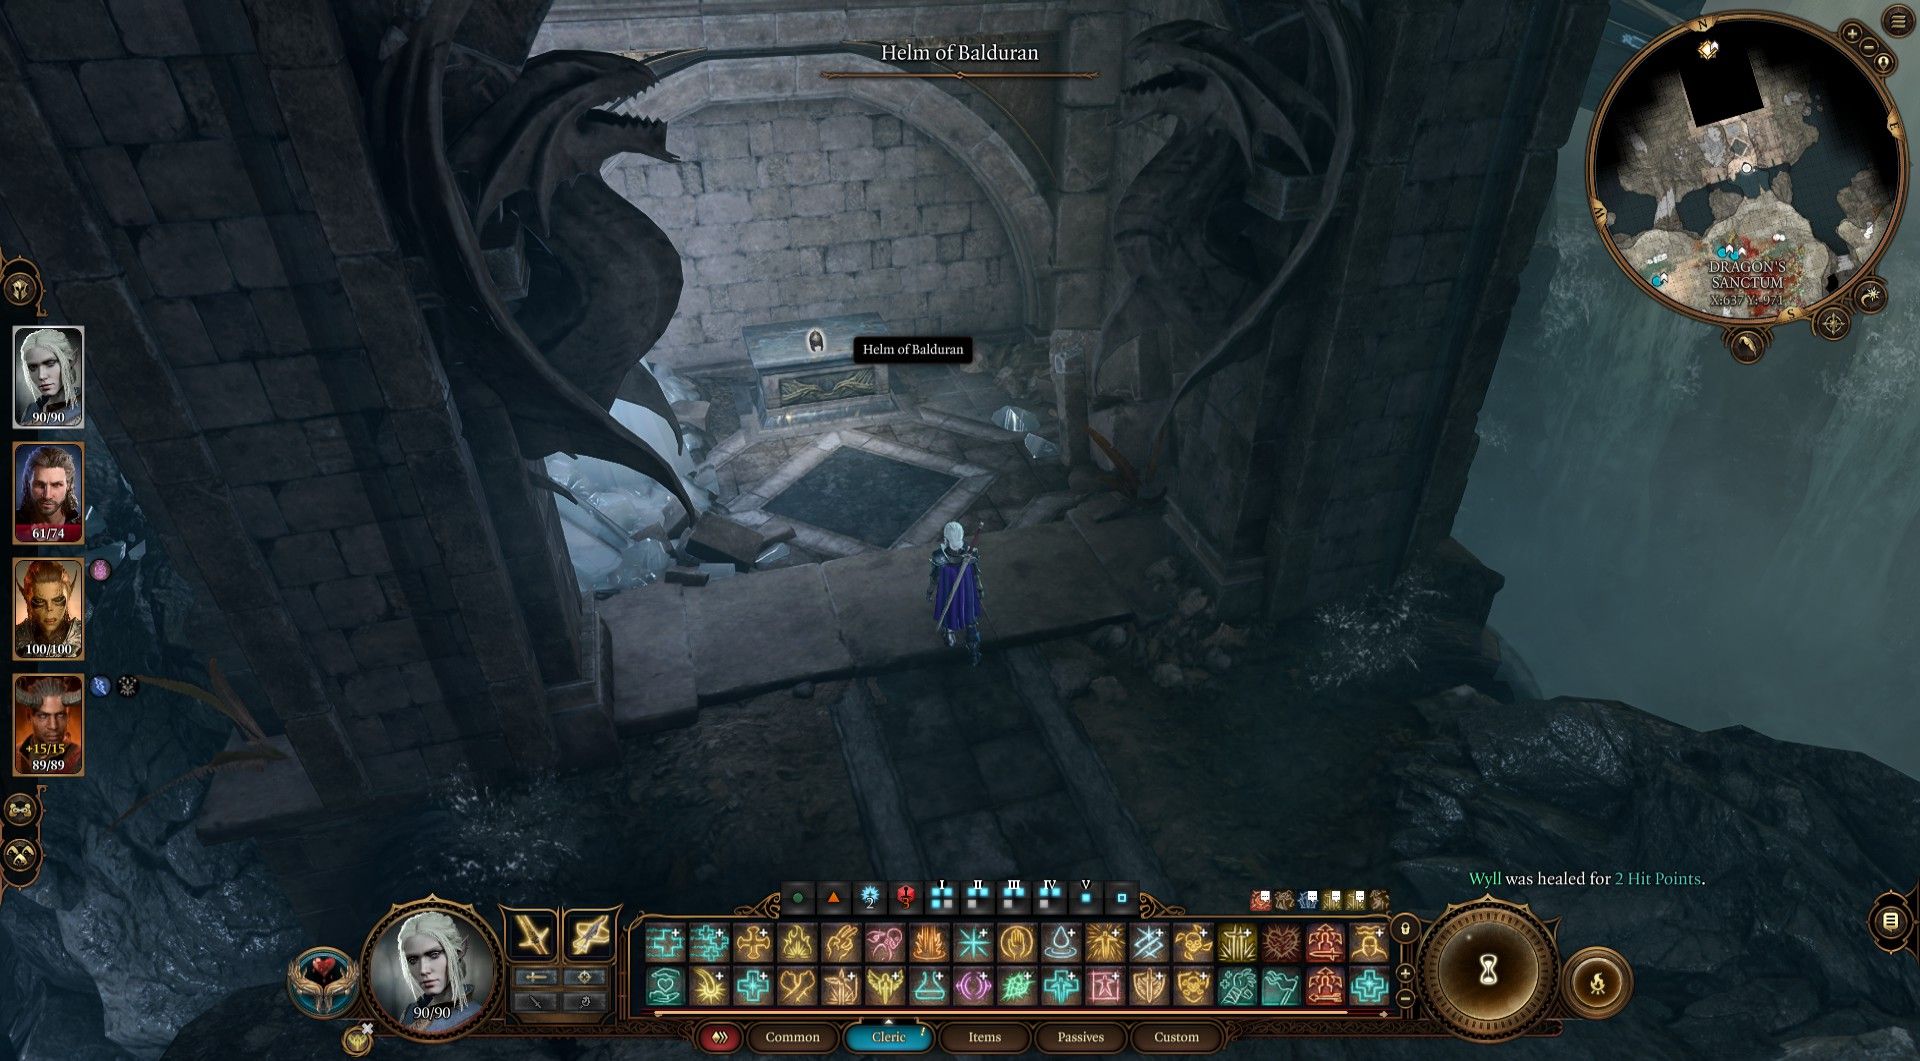 Player Finds And Highlights Helm Of Balduran On Altar In Dragon's Sanctum In Baldur's Gate 3